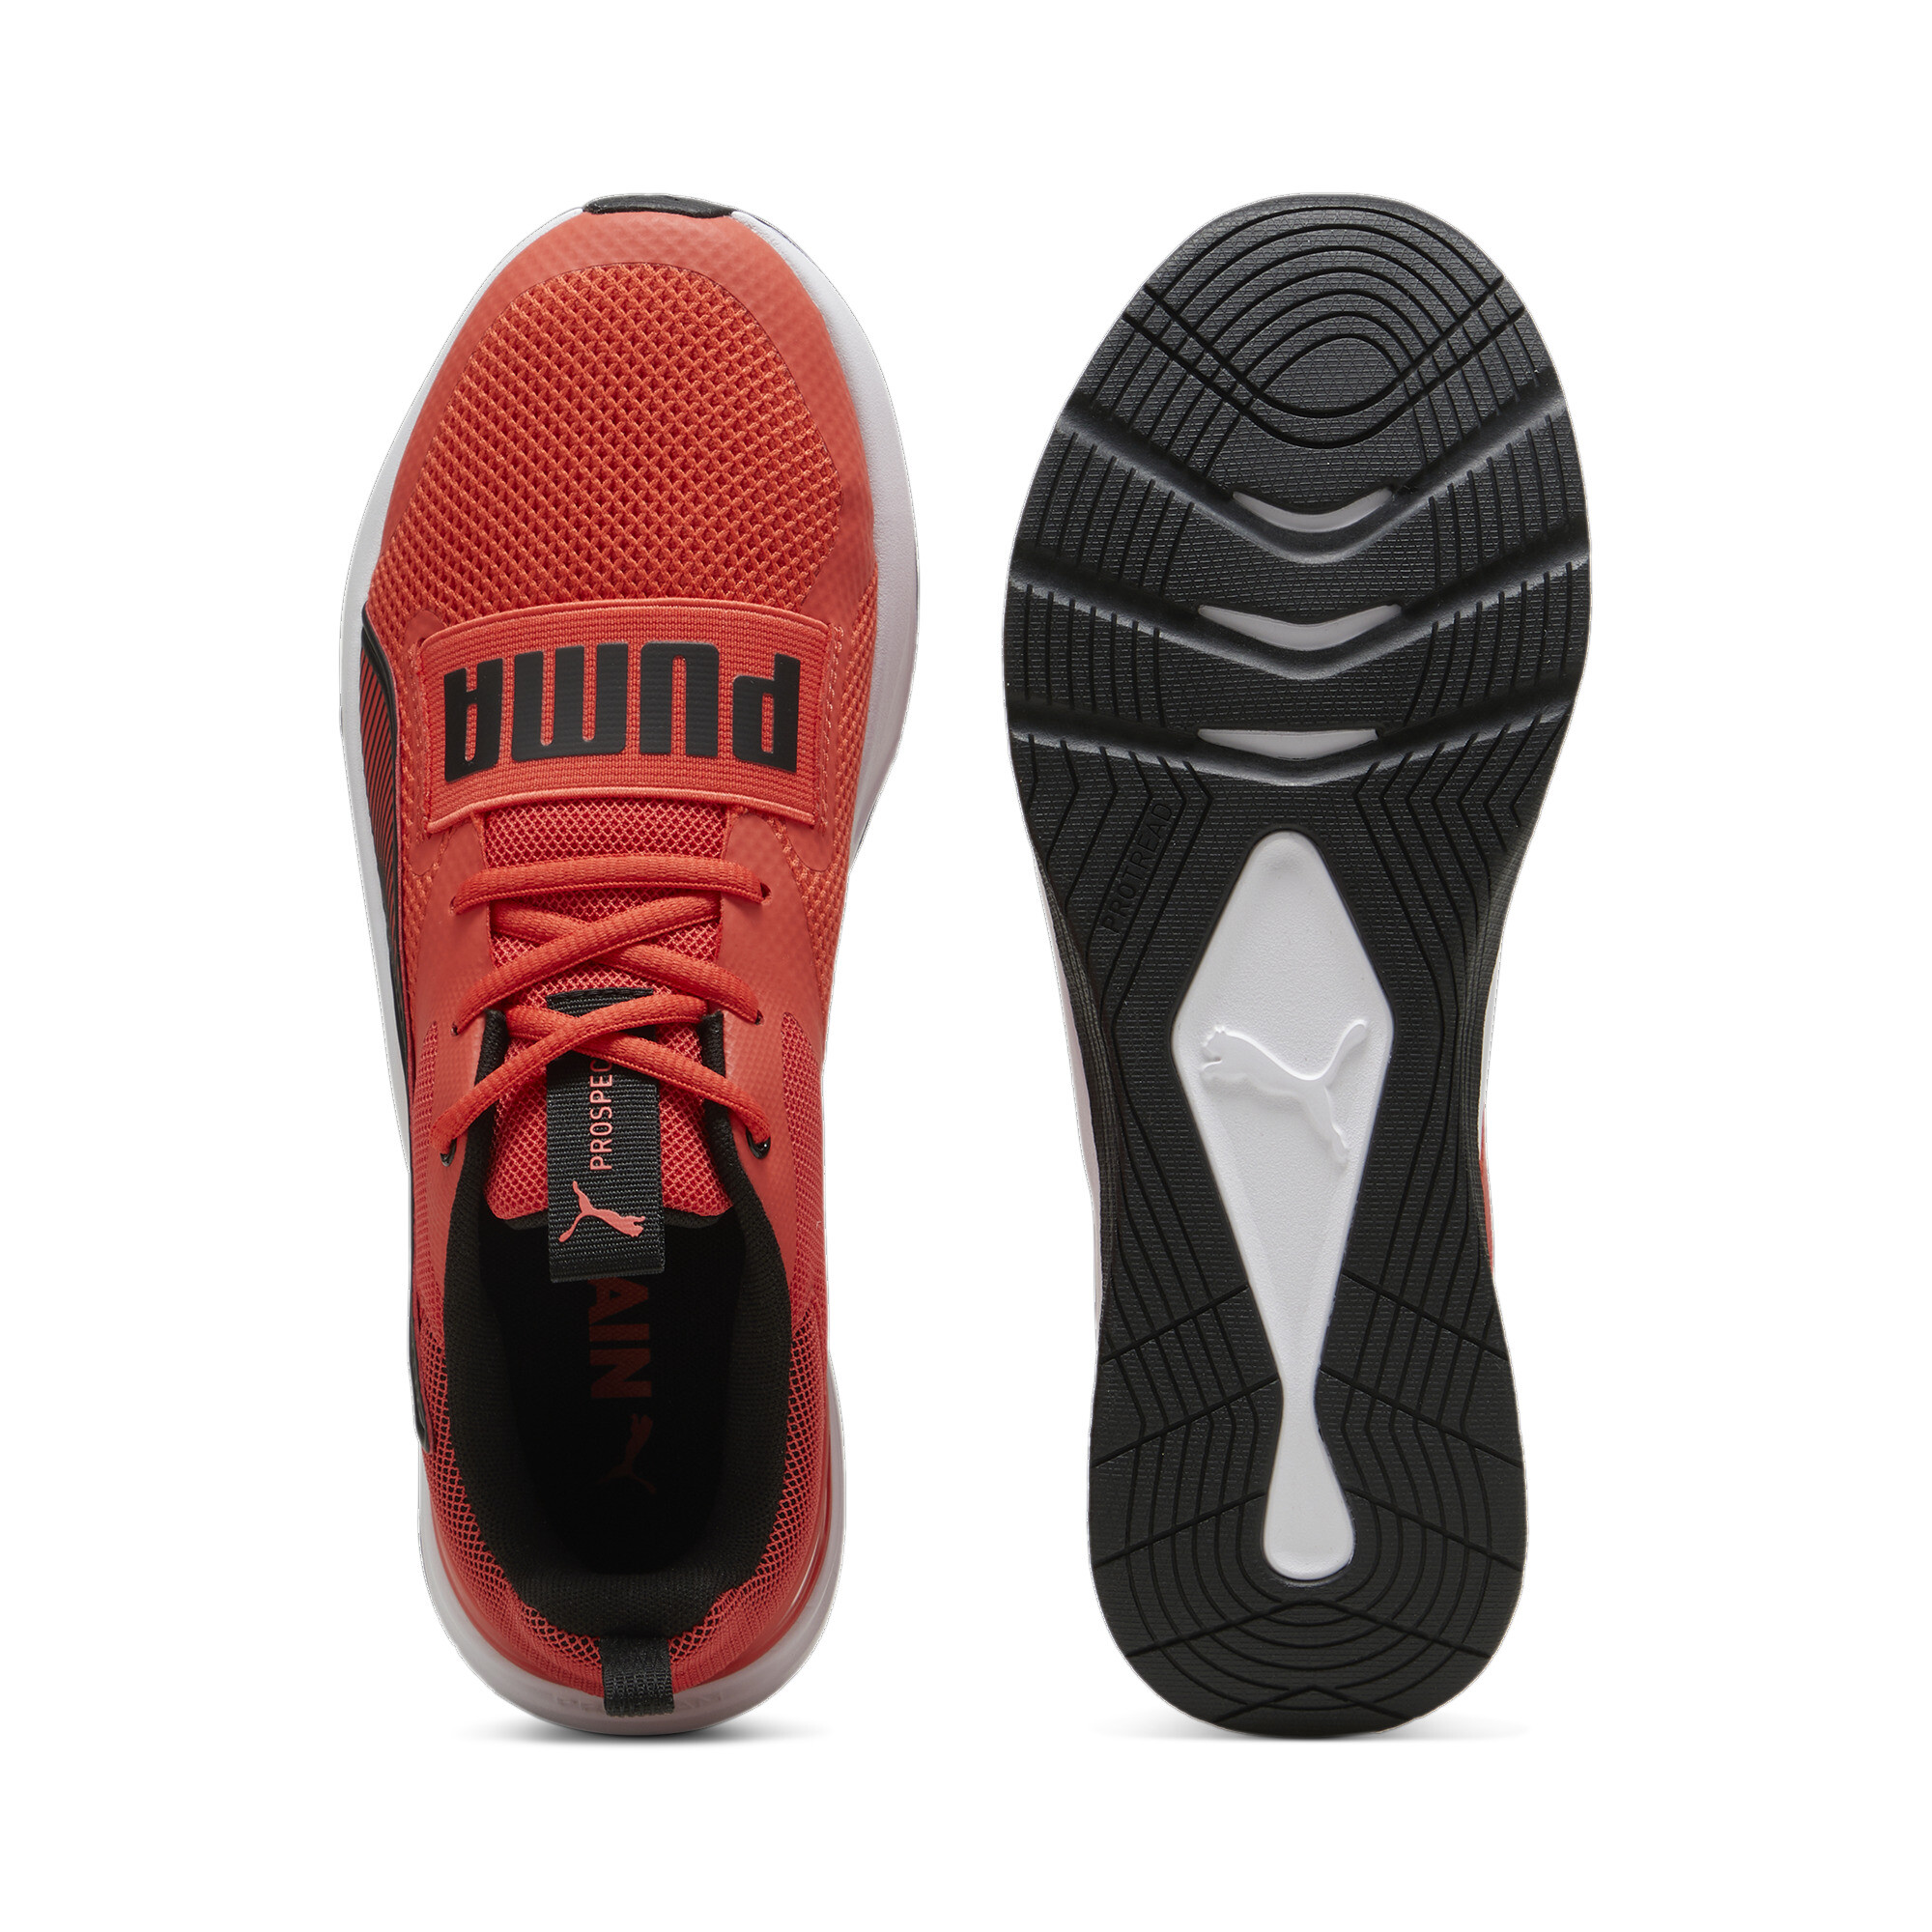 Men's PUMA Prospect Training Shoes In Red, Size EU 46